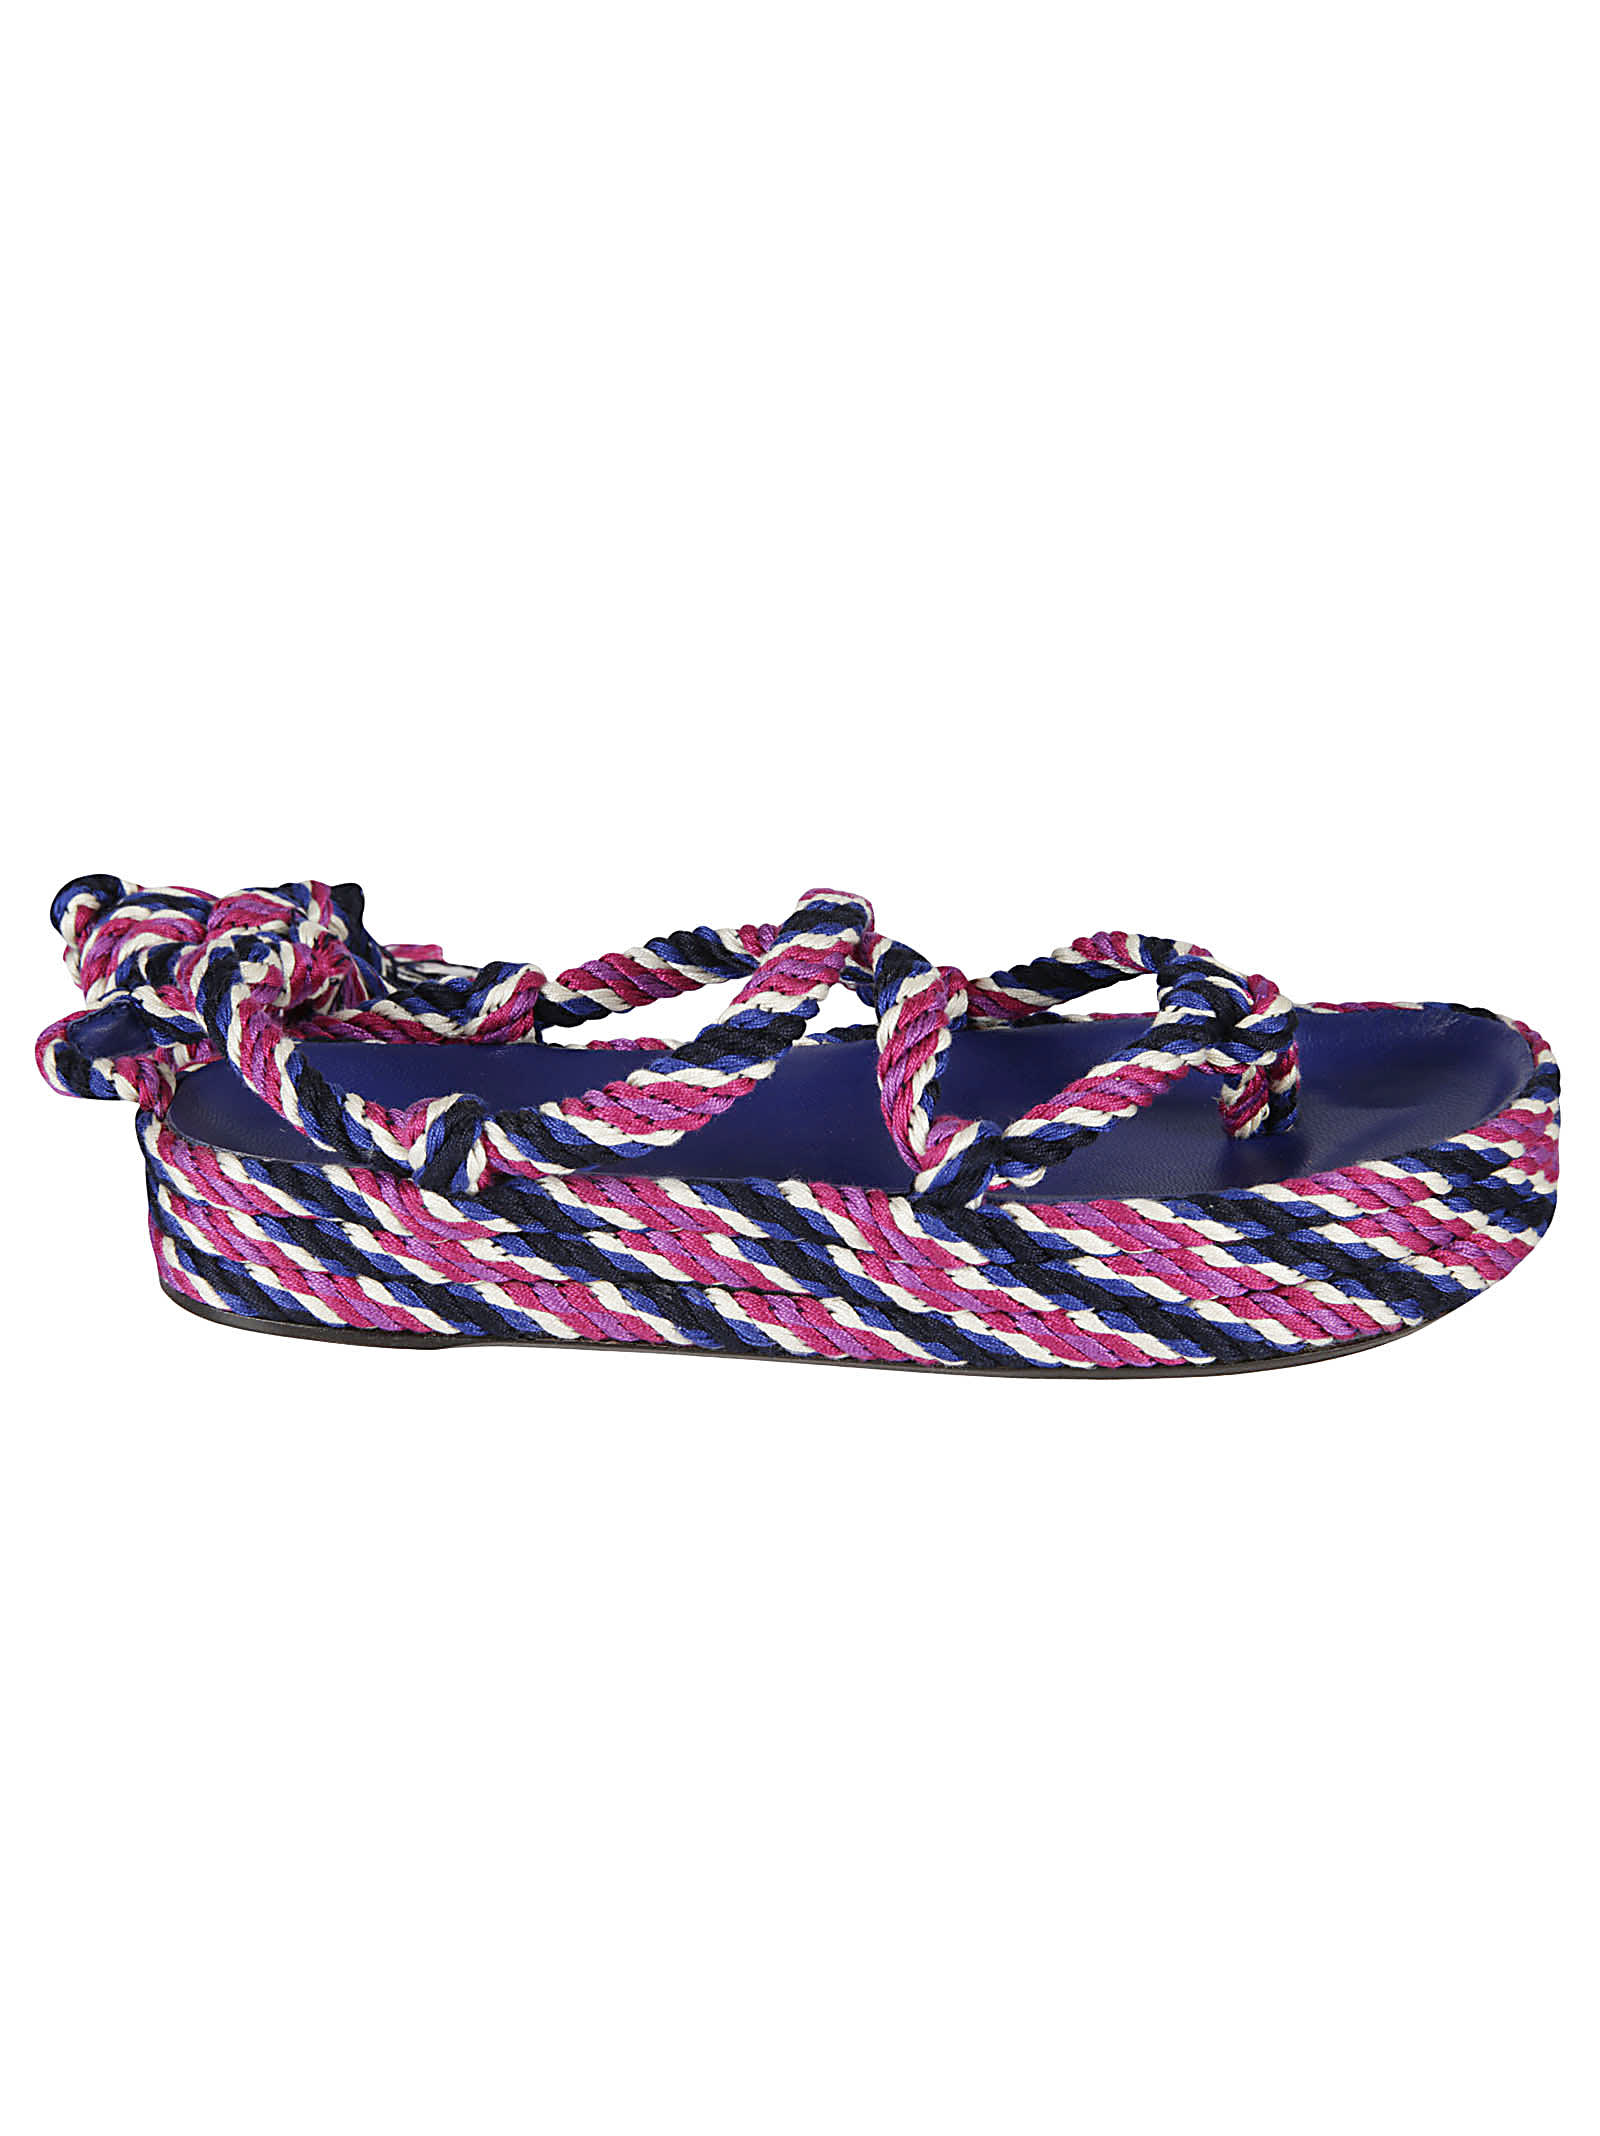 Isabel Marant Rope Sandals